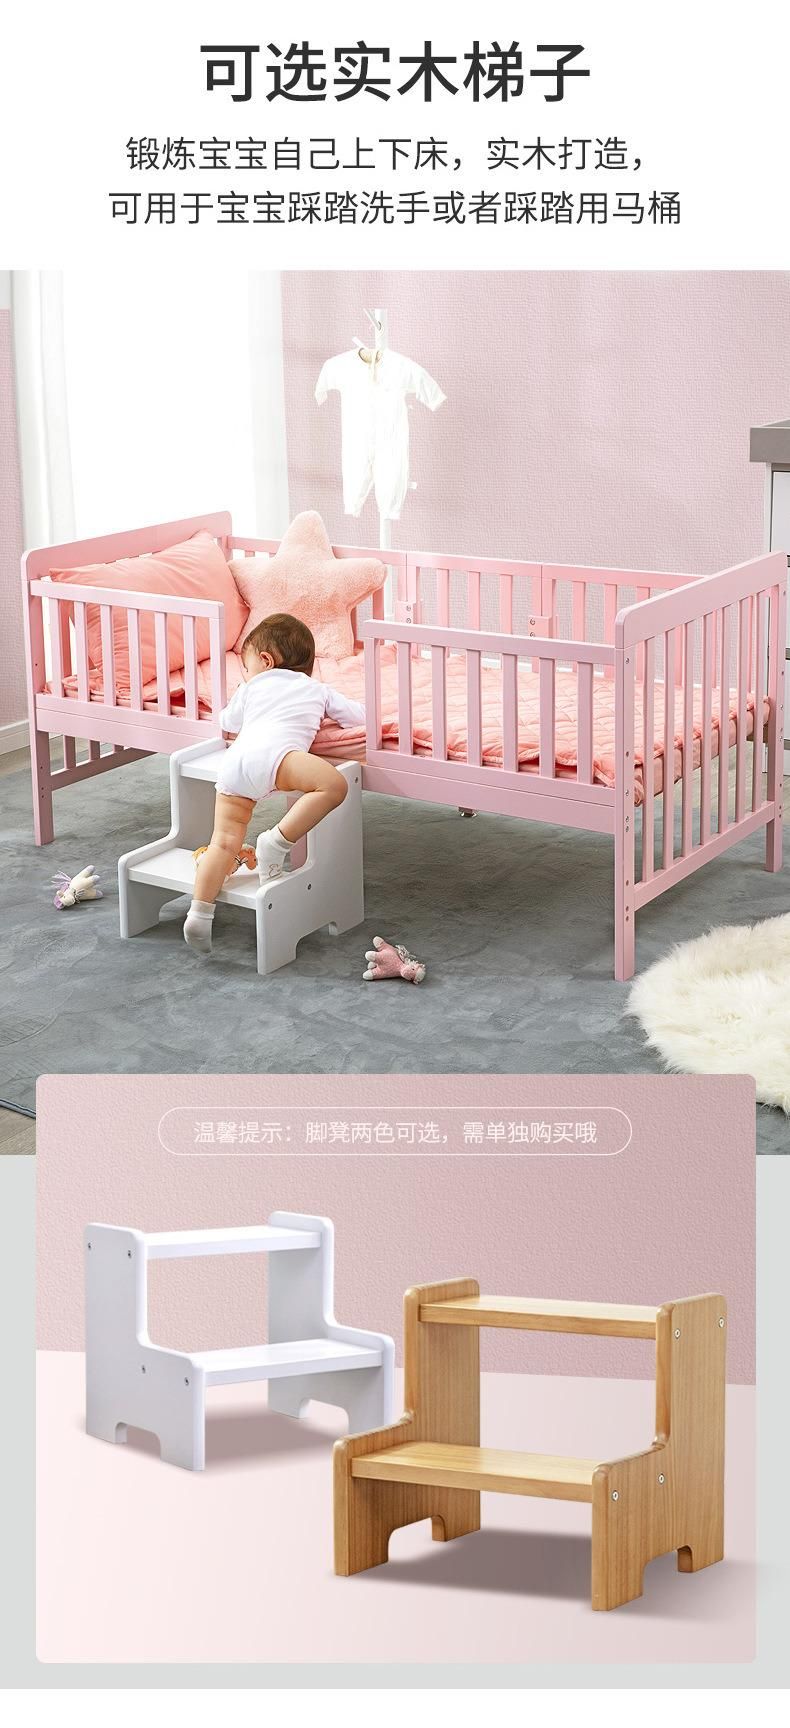 Wooden Crib with Guardrail Widening Stitching Bed Kindergarten Baby Bed